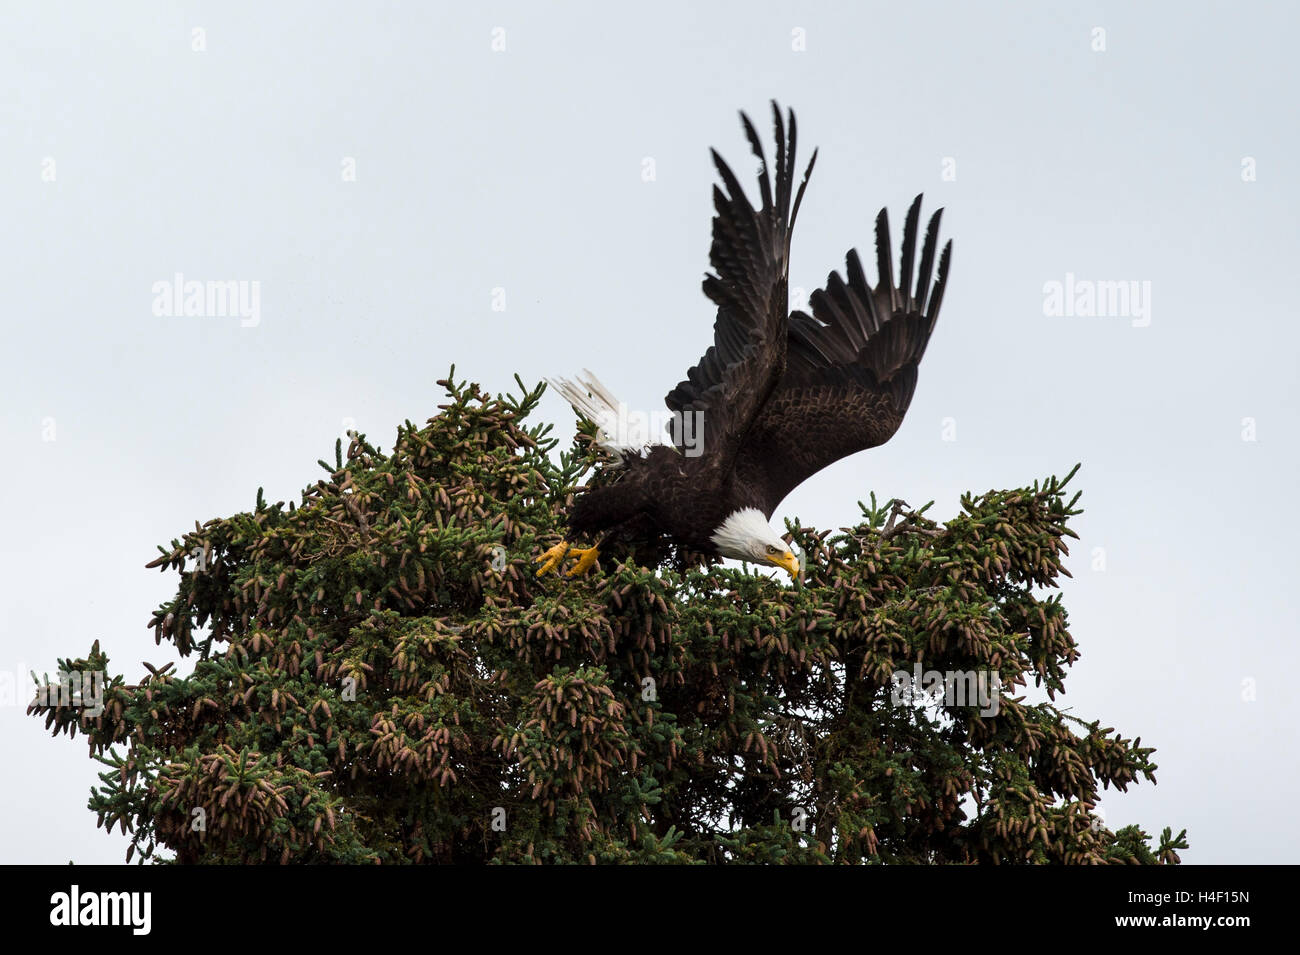 Bald eagle taking off from a tree, Katmai National Park, Alaska Stock Photo